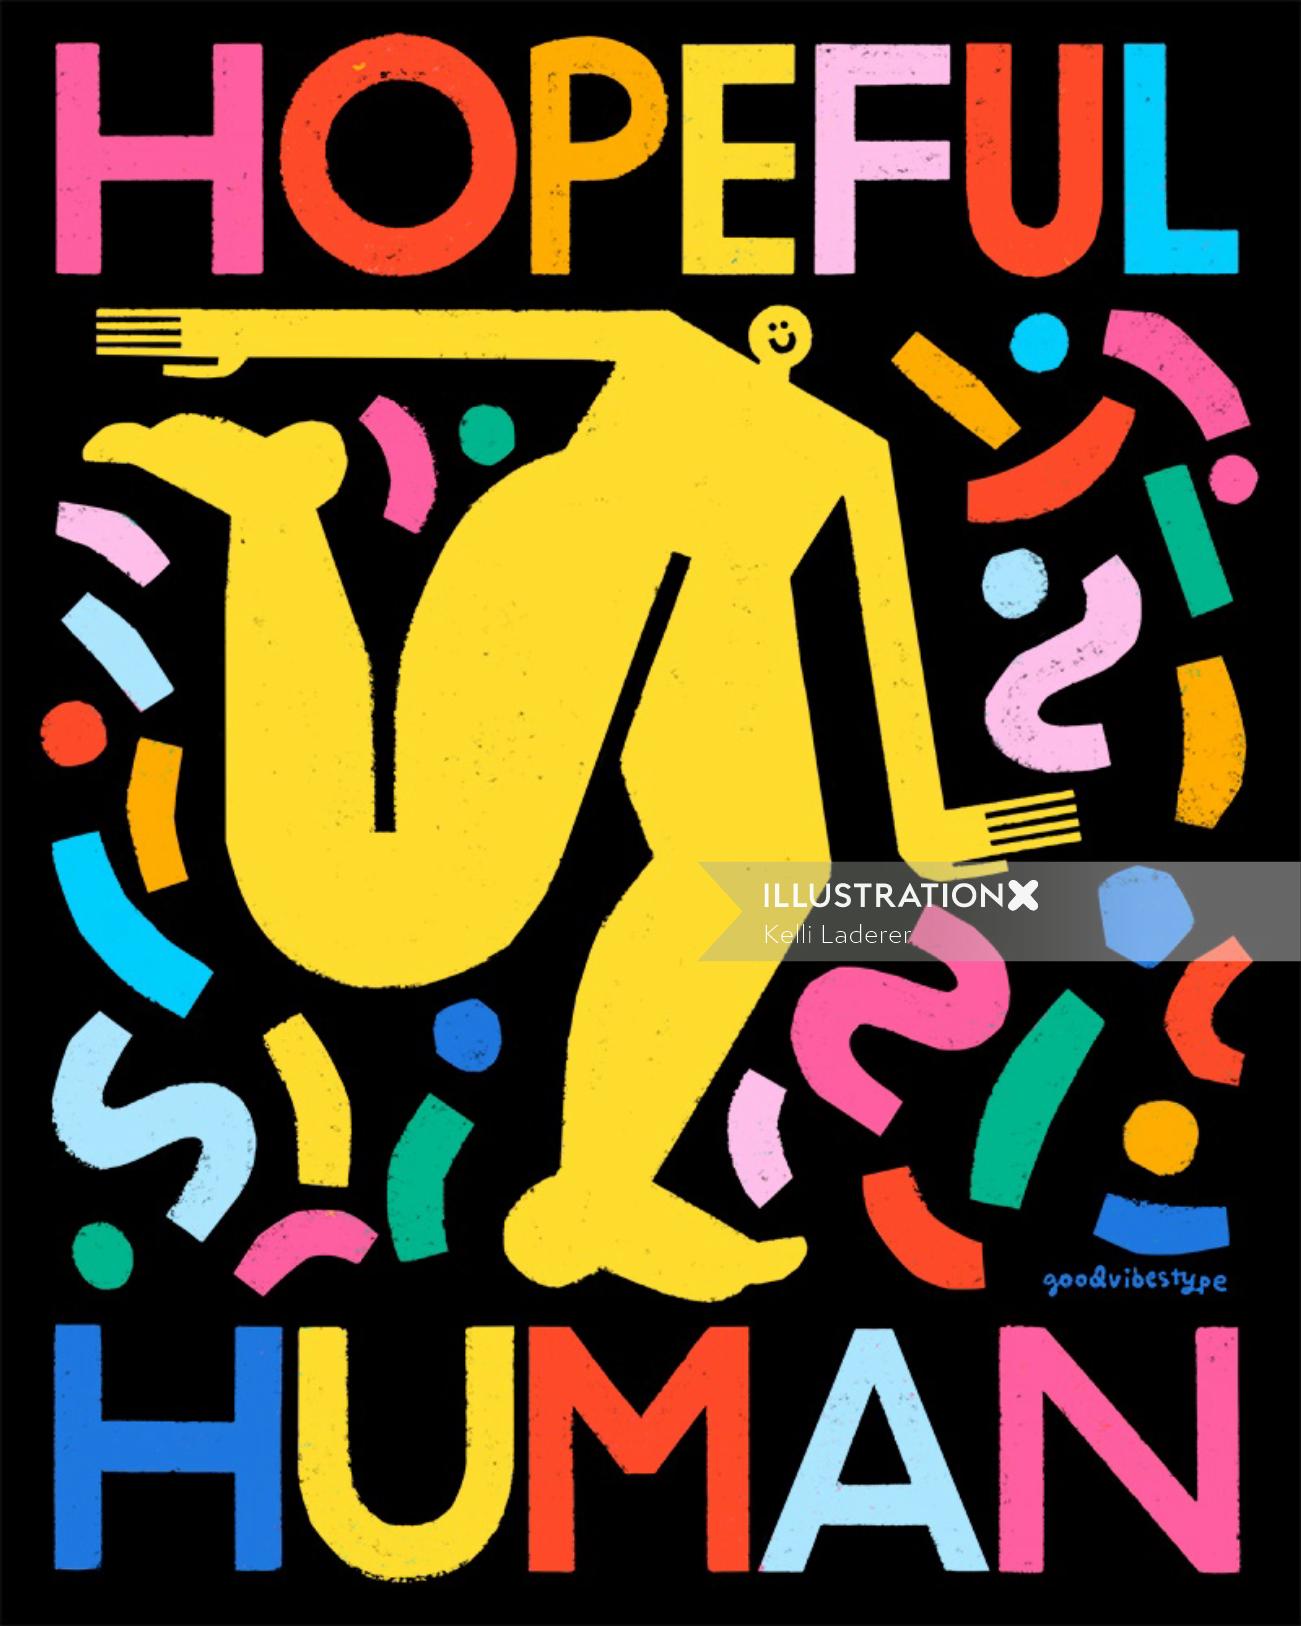 Lettering art of hopeful human